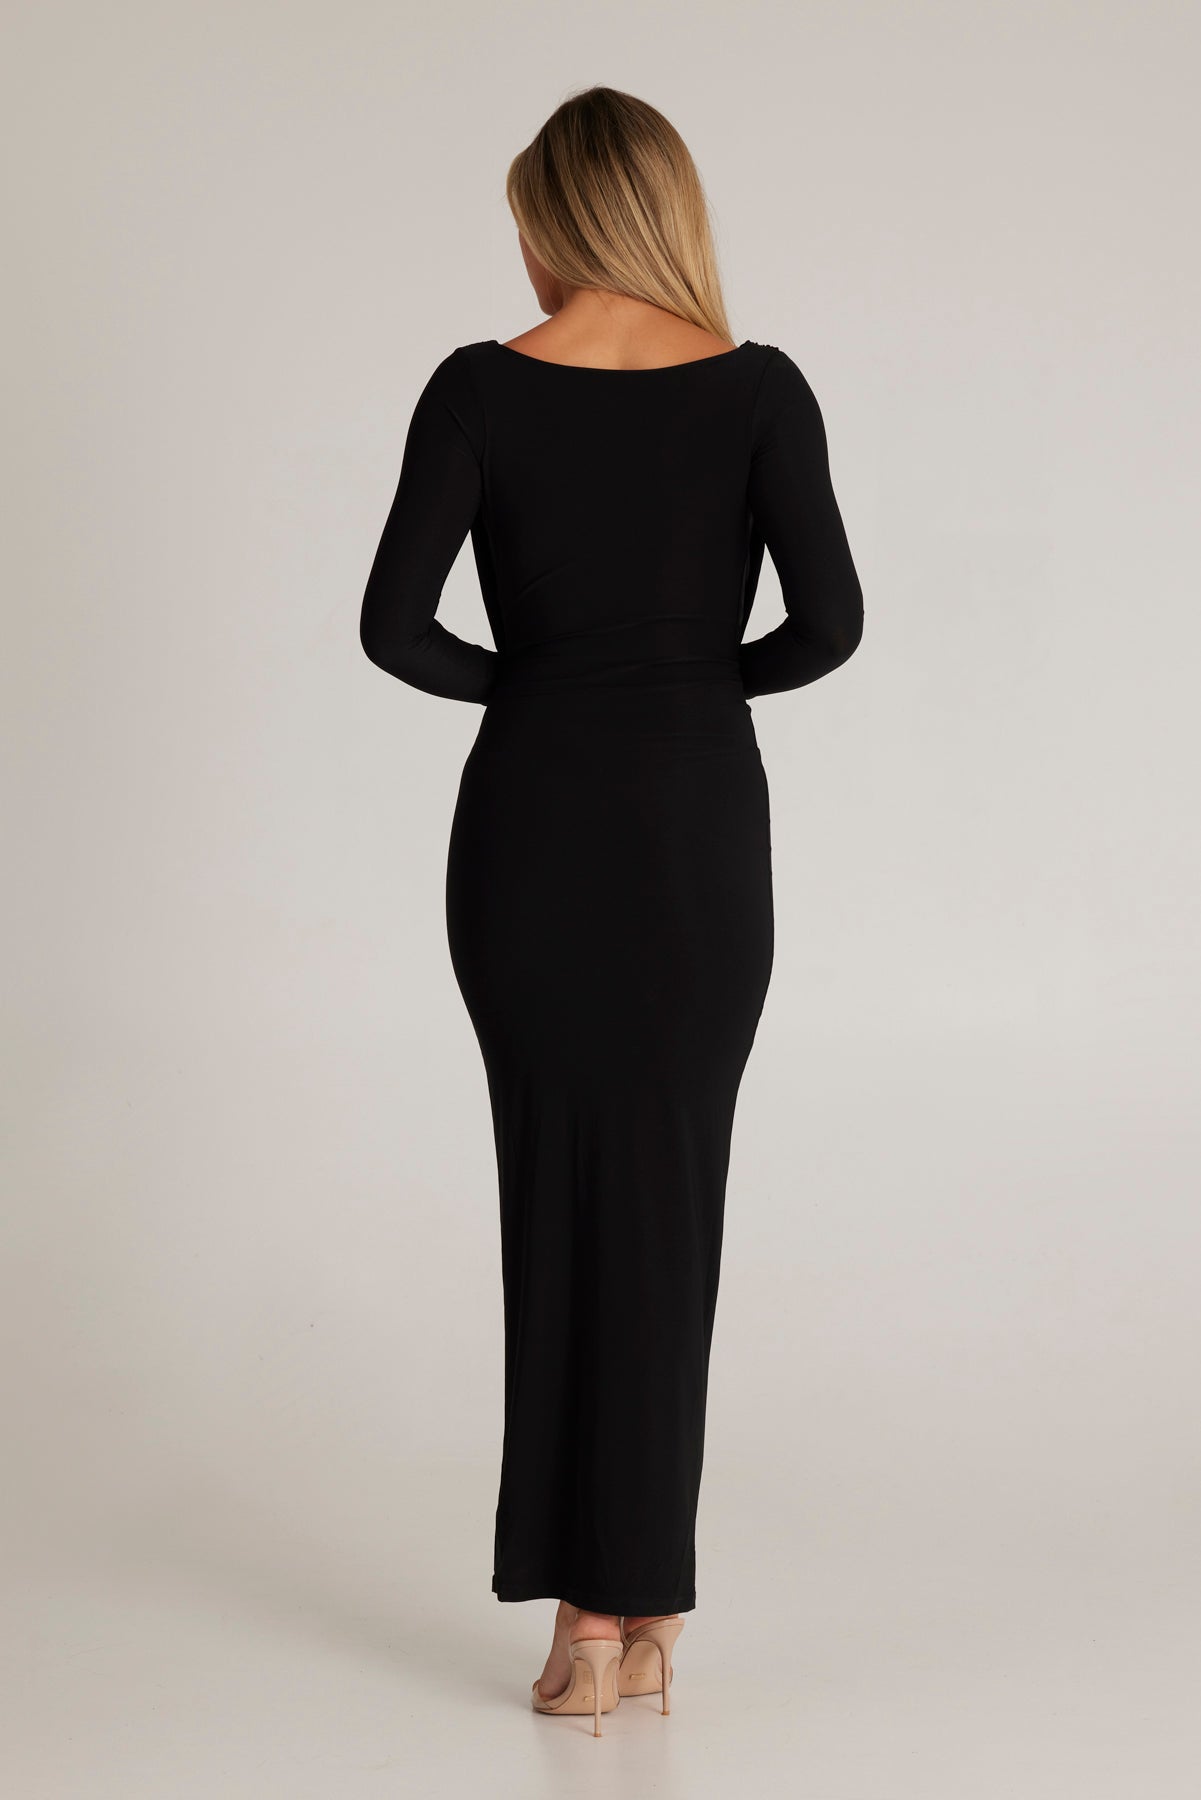 MÉLANI The Label AMARI Black Reversible Long Sleeve Dress